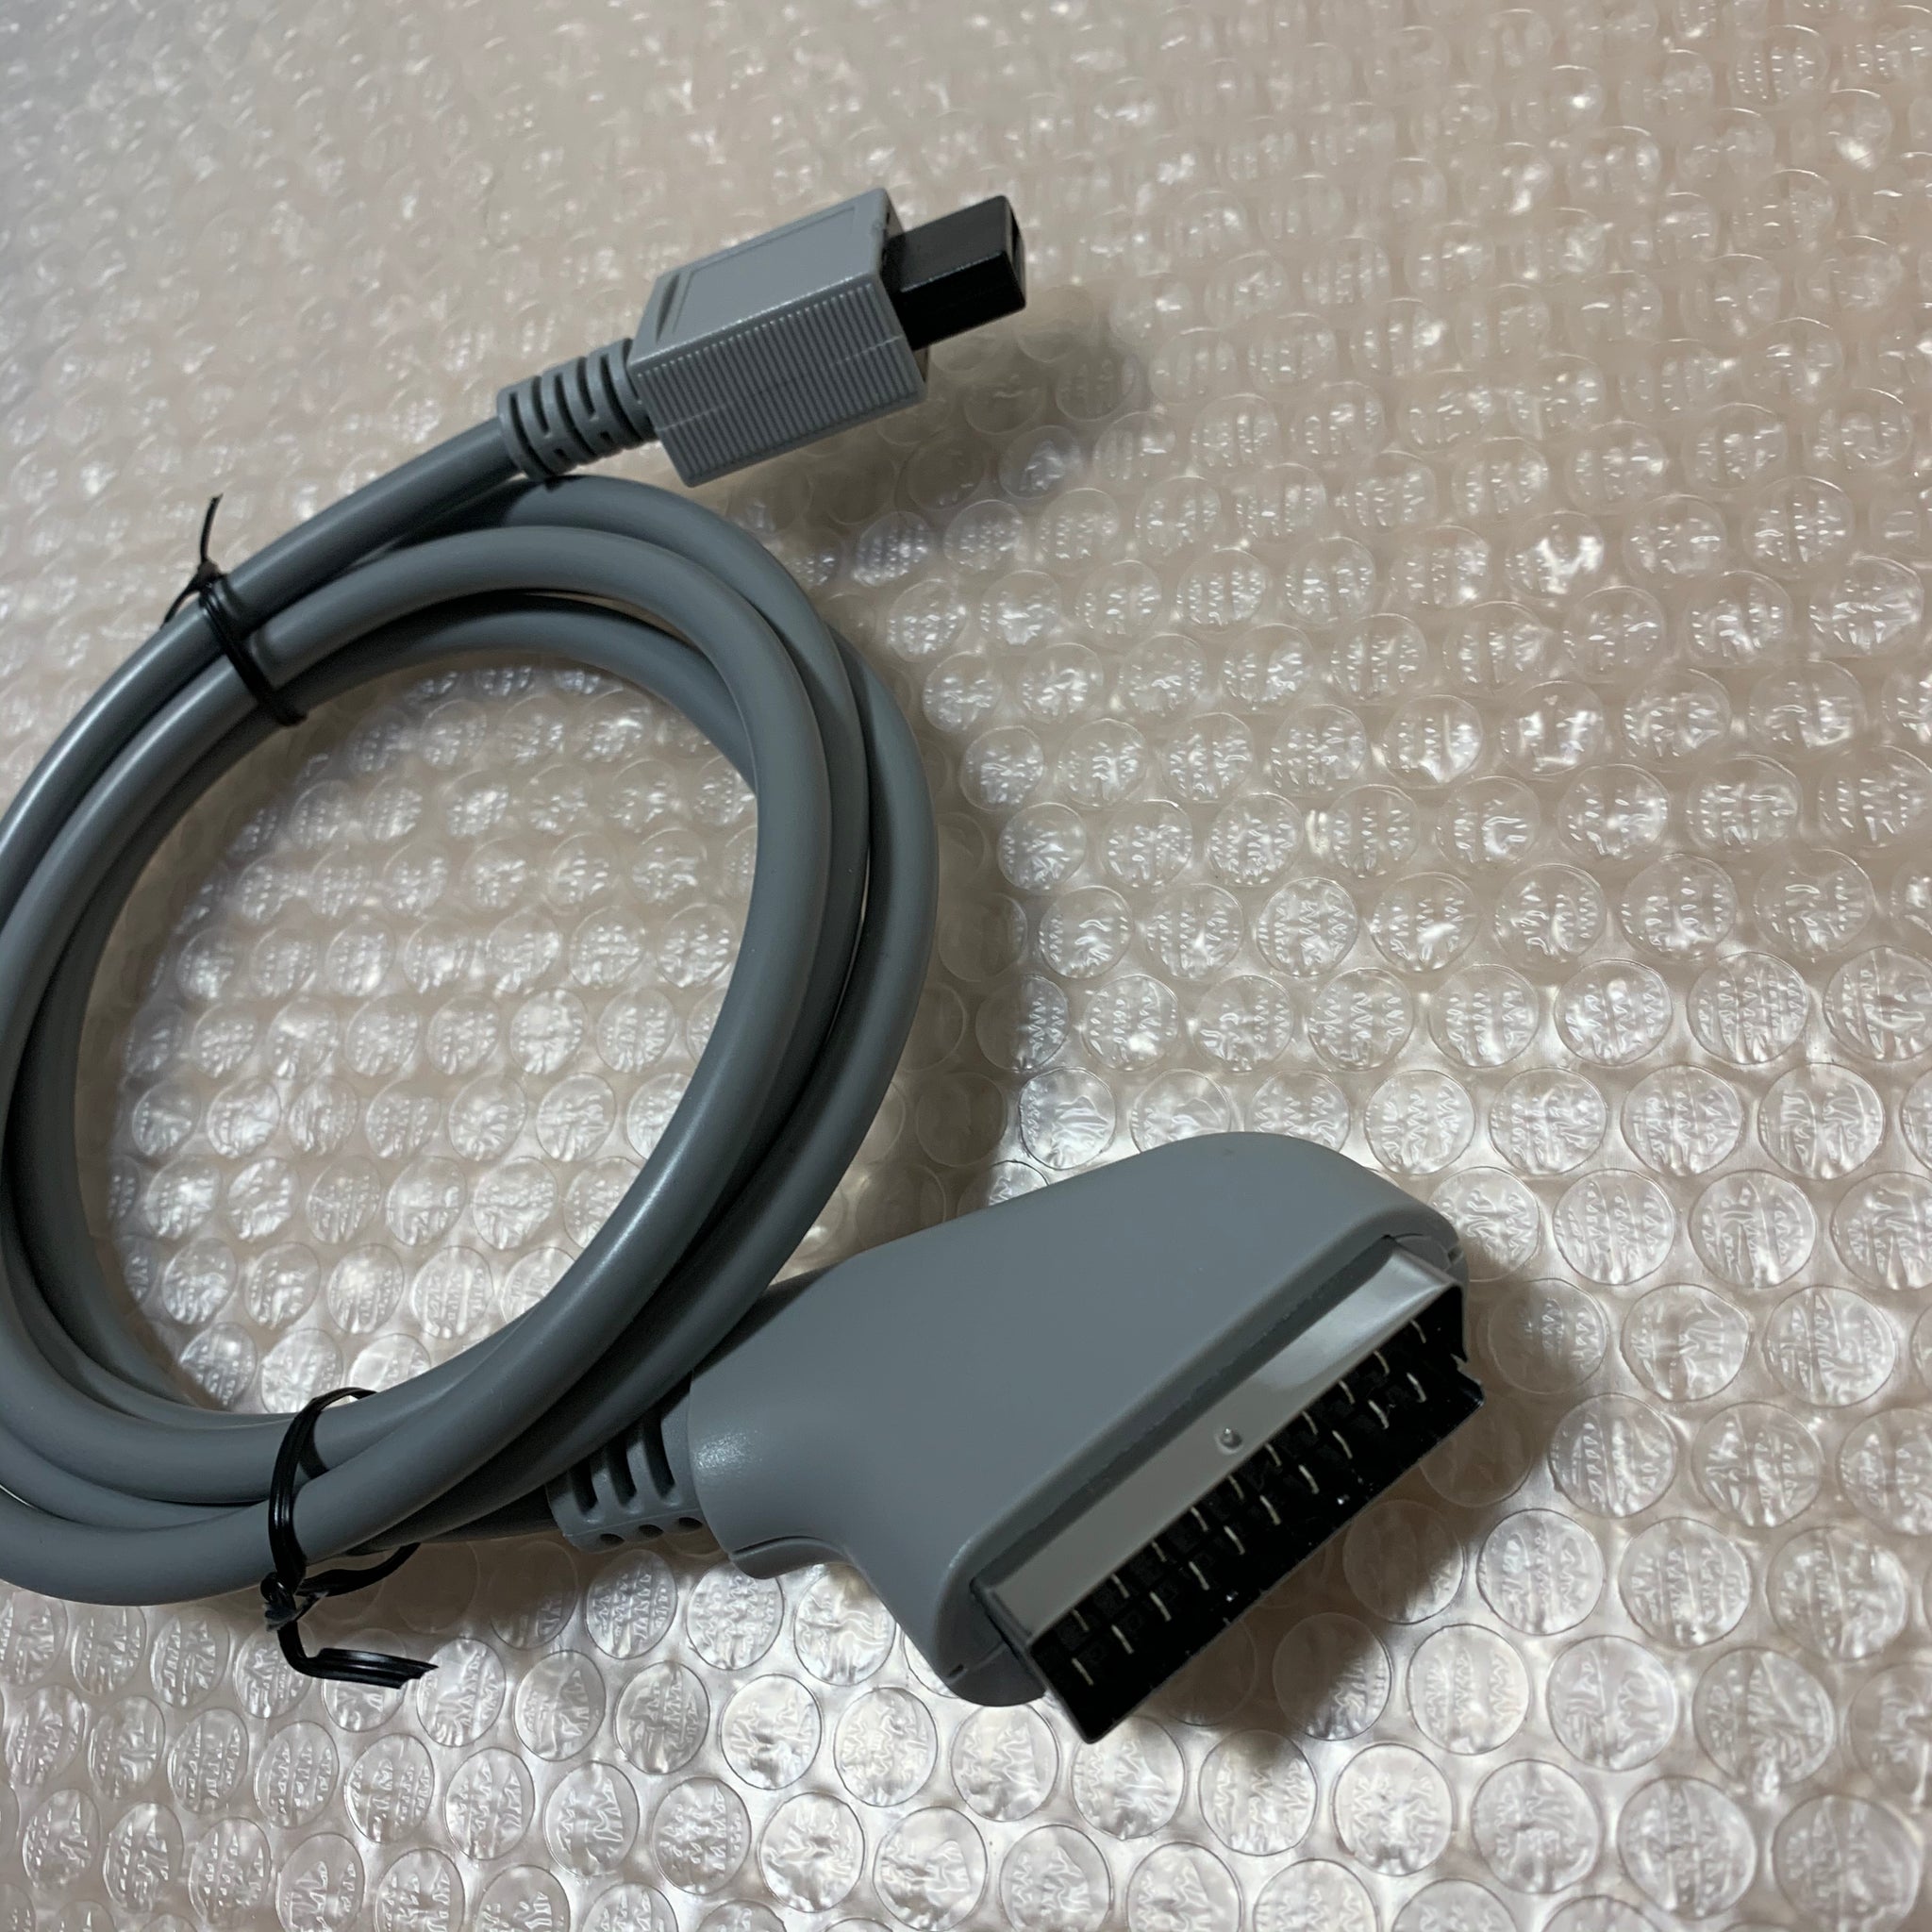 Unboxing & Testing Nedis SCART to HDMI Converter 